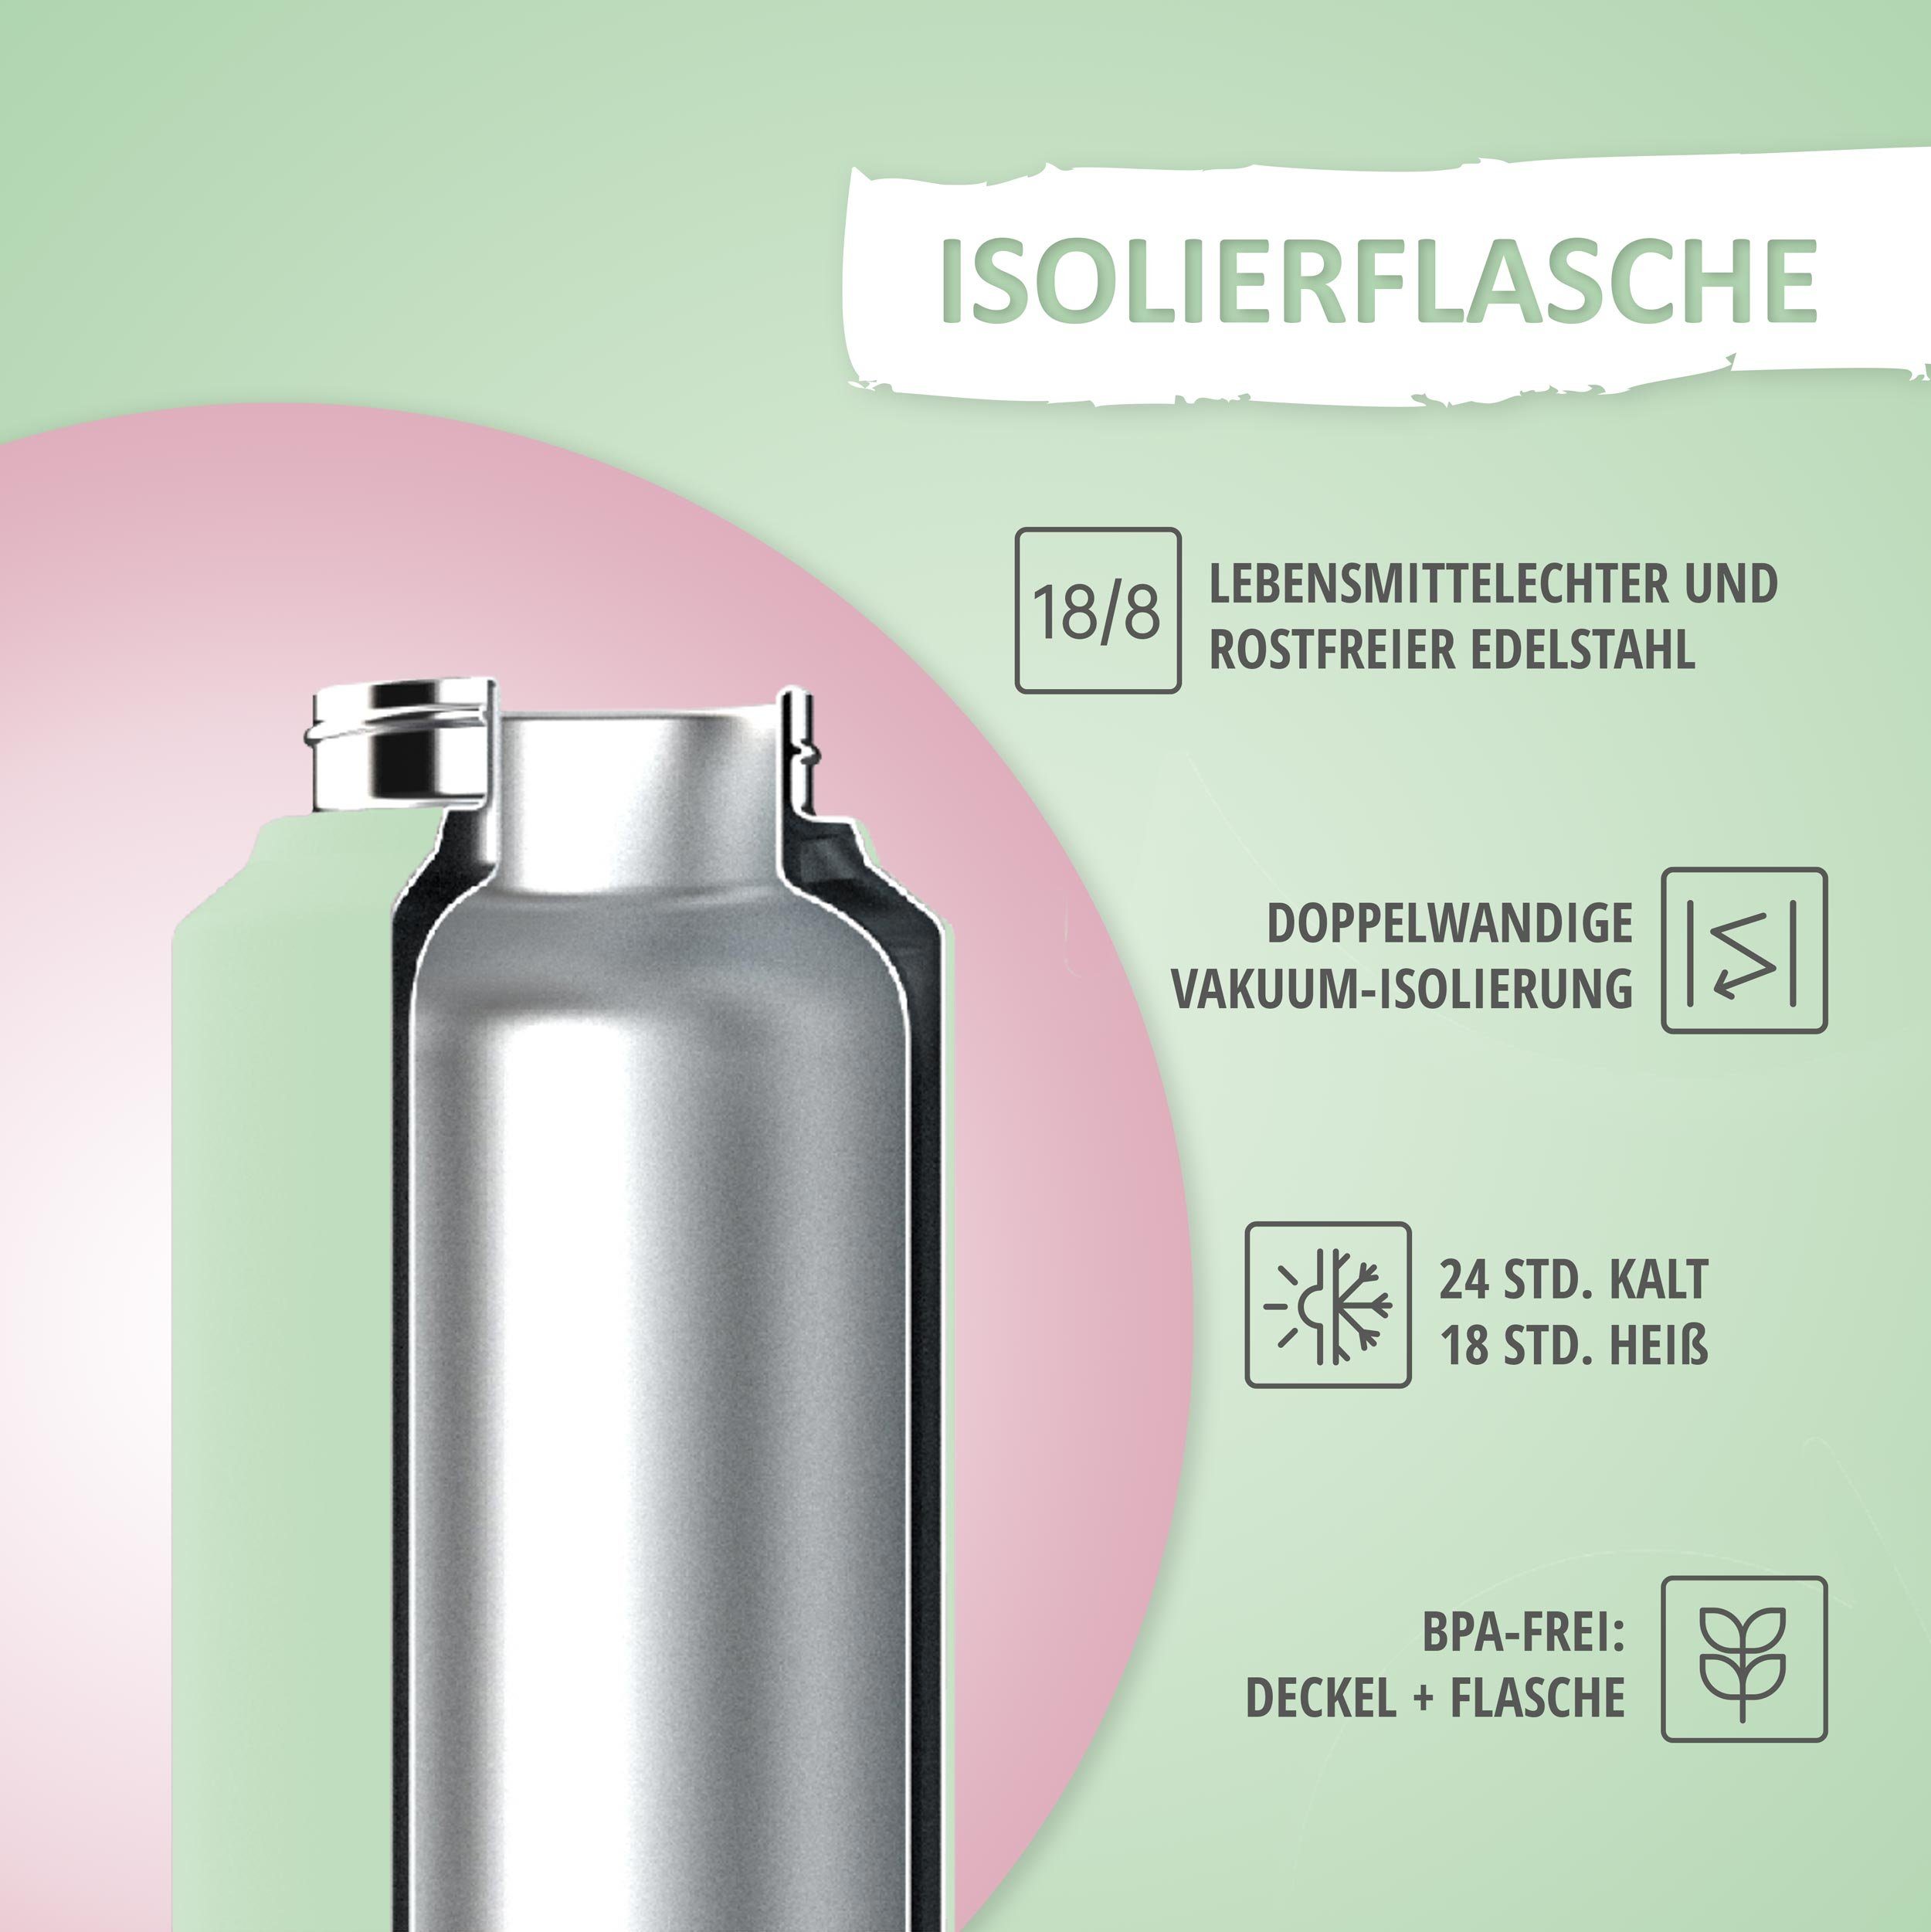 auslaufsicher, oder 350ml Edelstahl, Trinkflasche, BPA-frei, Light Isolierflasche Inhalt 500ml Green/Rosa Inhalt kyds